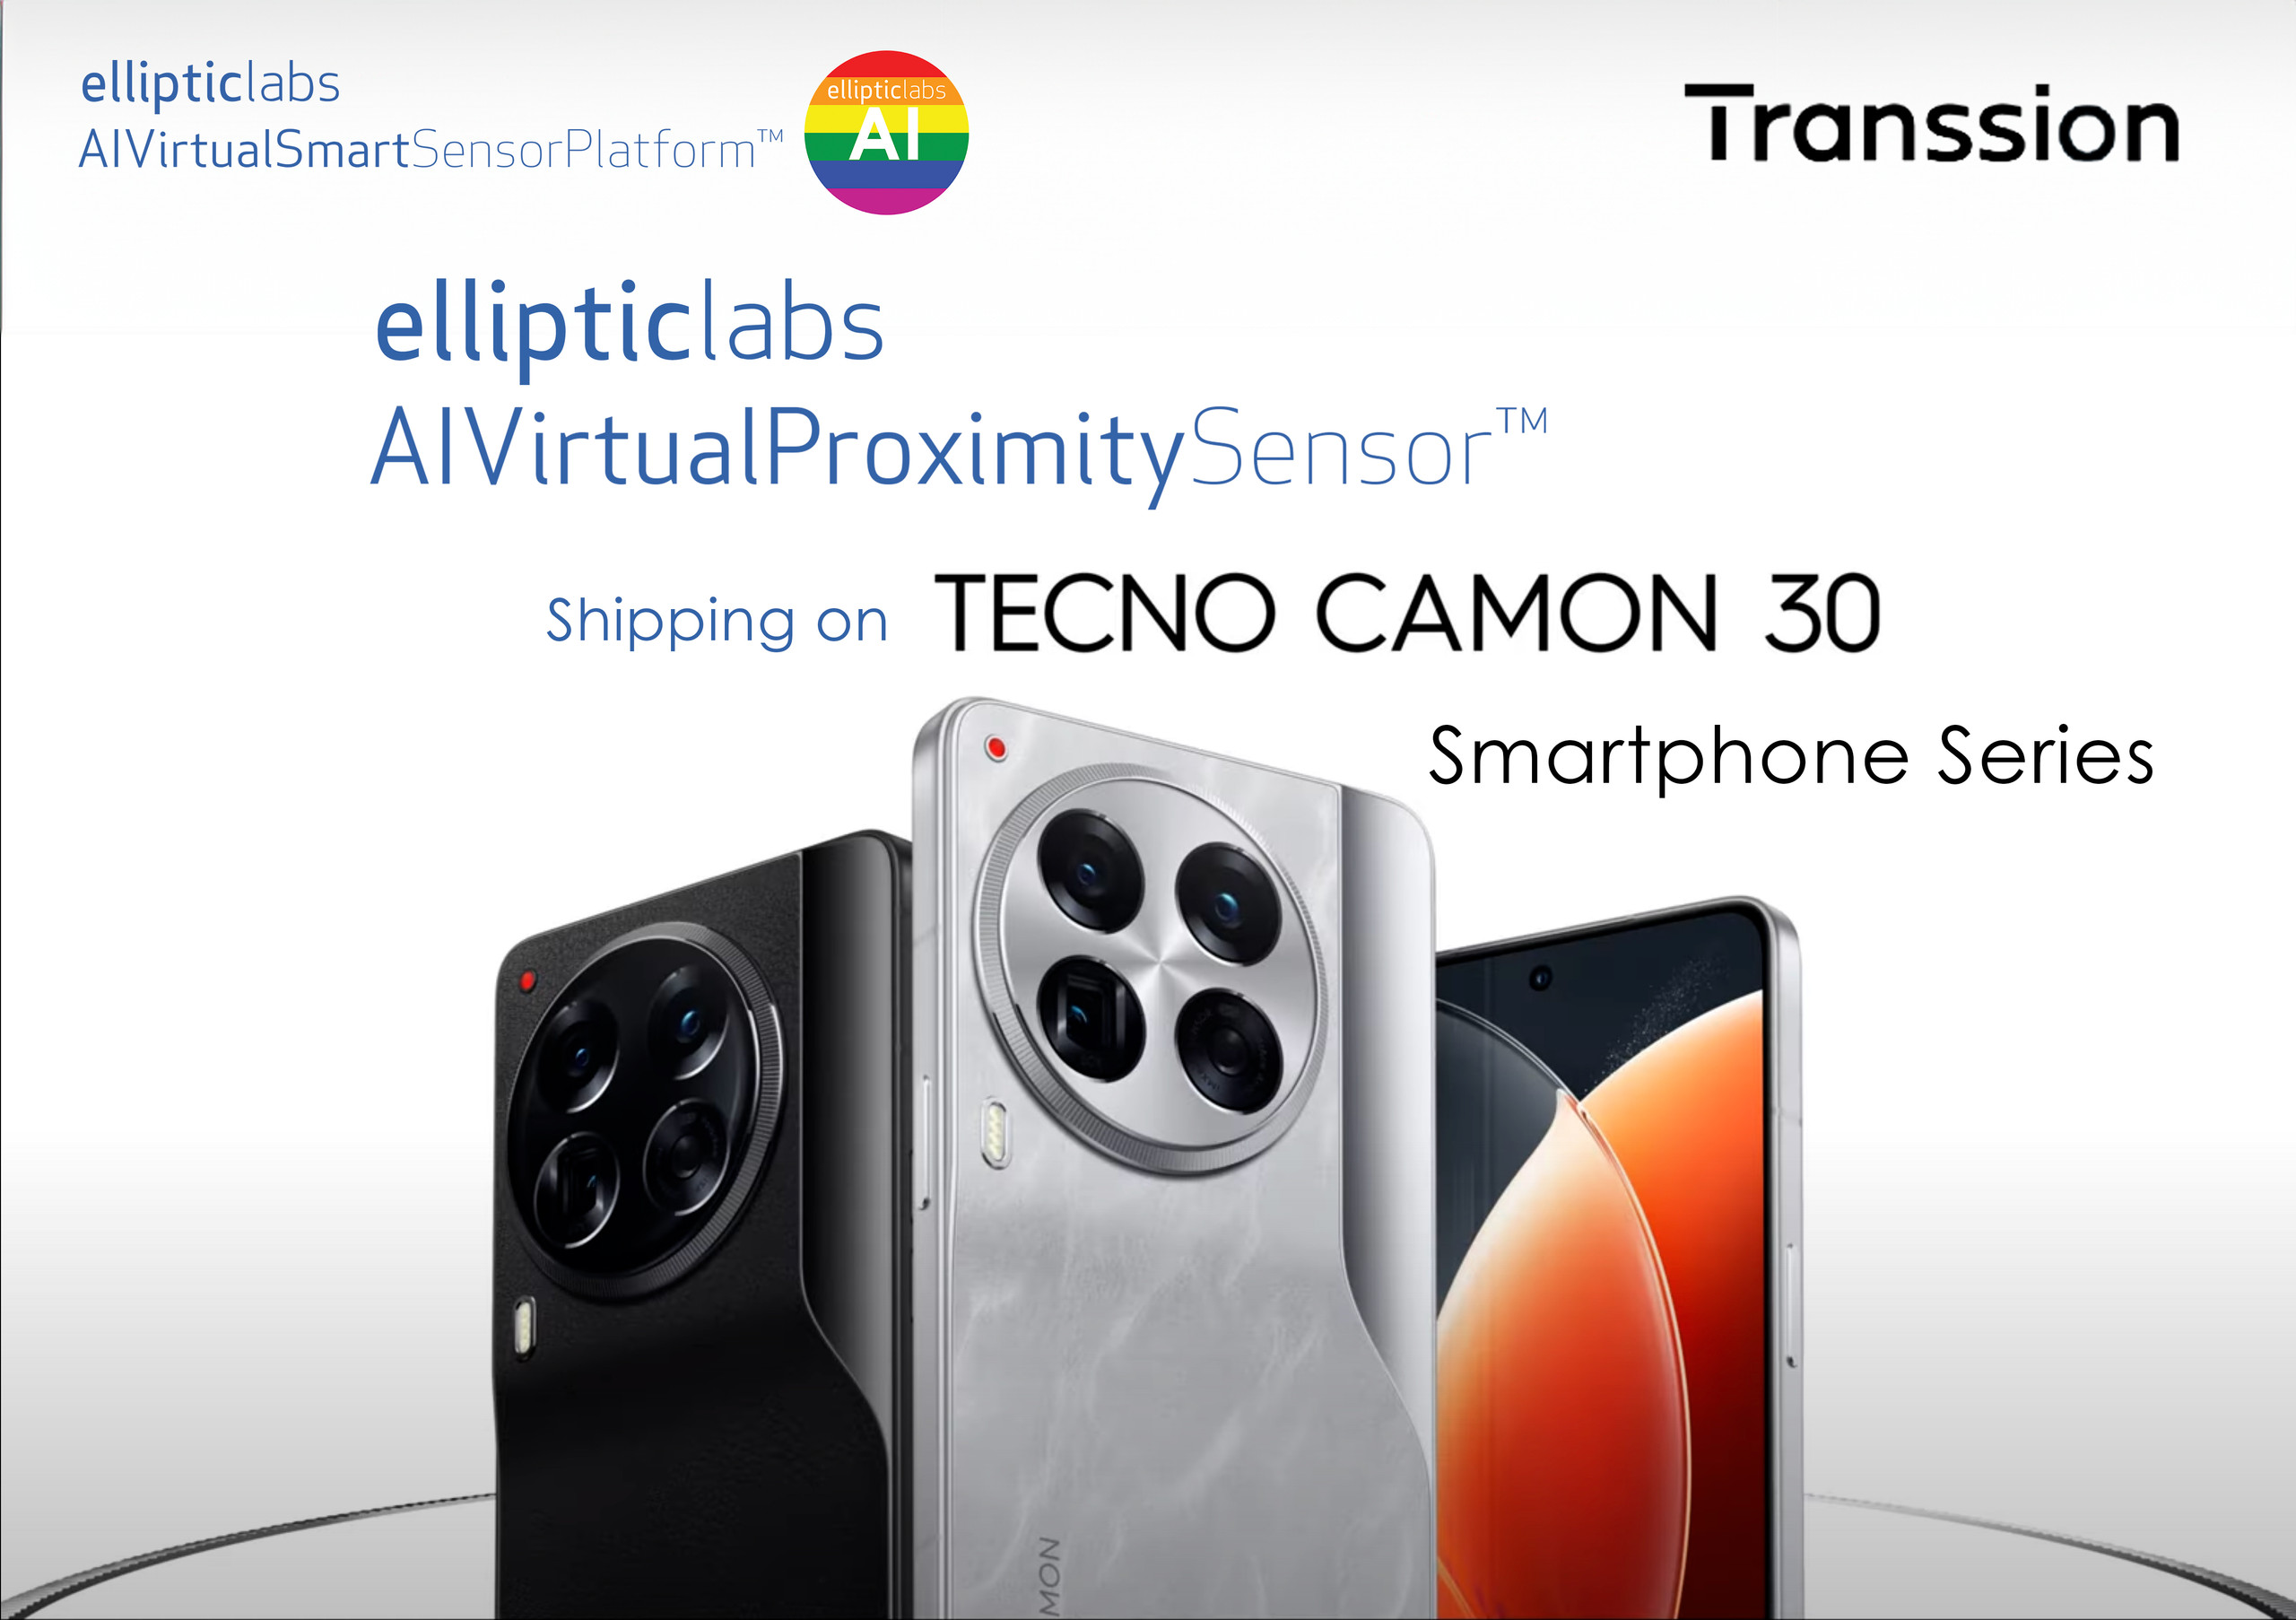 Elliptic Labs Shipping on Transsion’s Tecno Camon 30 Series Smartphones